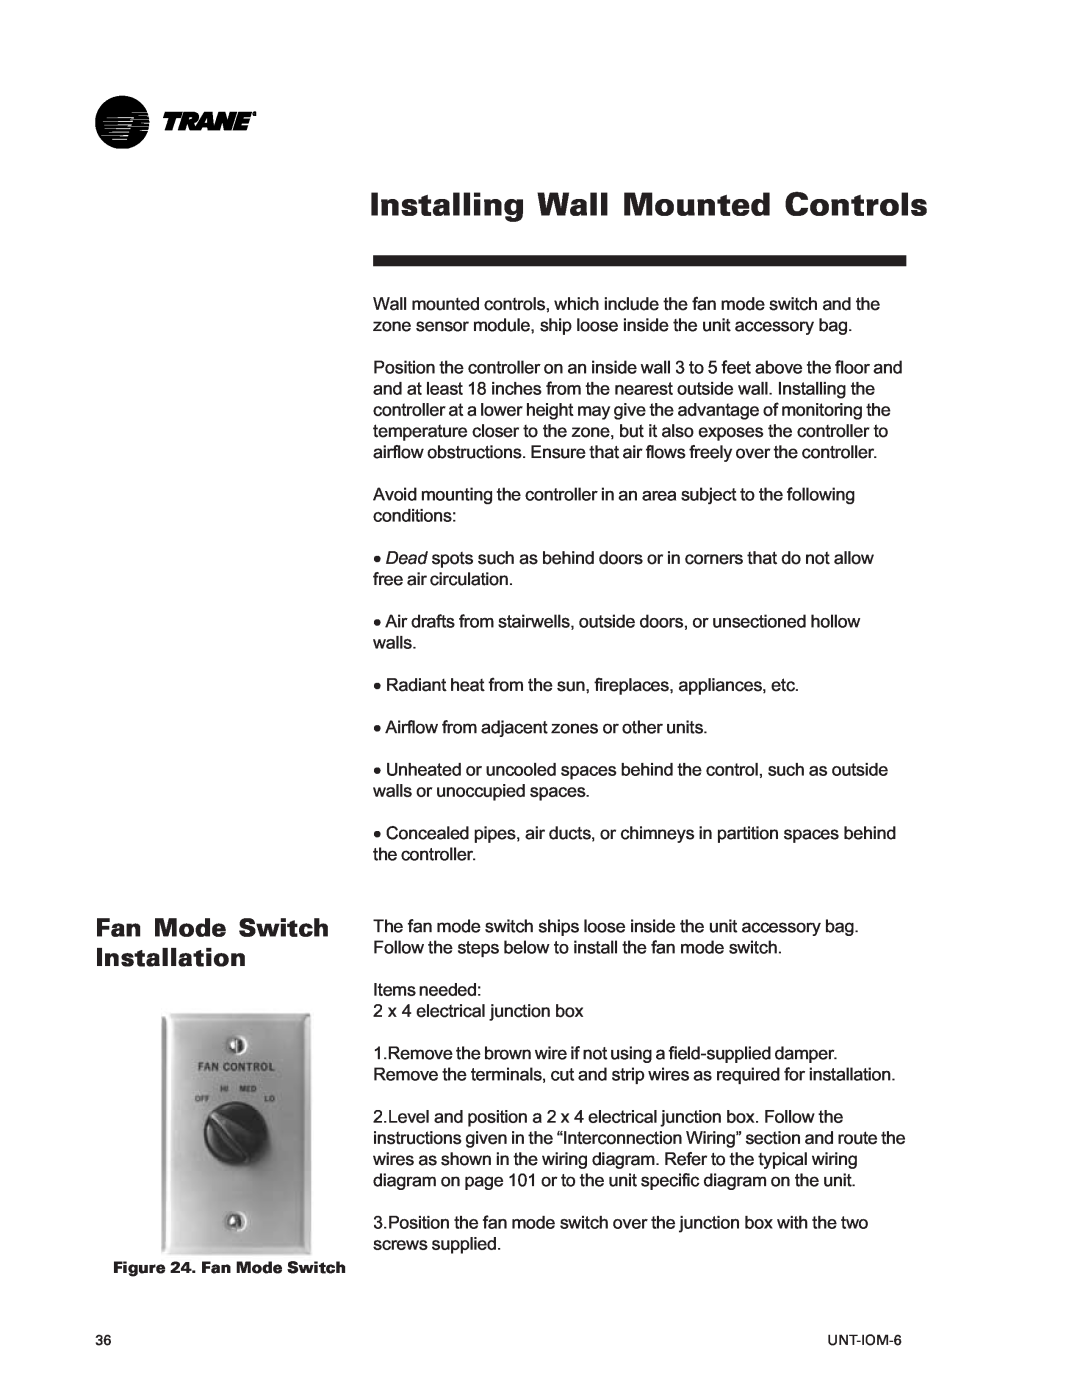 Trane LO manual Installing Wall Mounted Controls, Fan Mode Switch Installation 